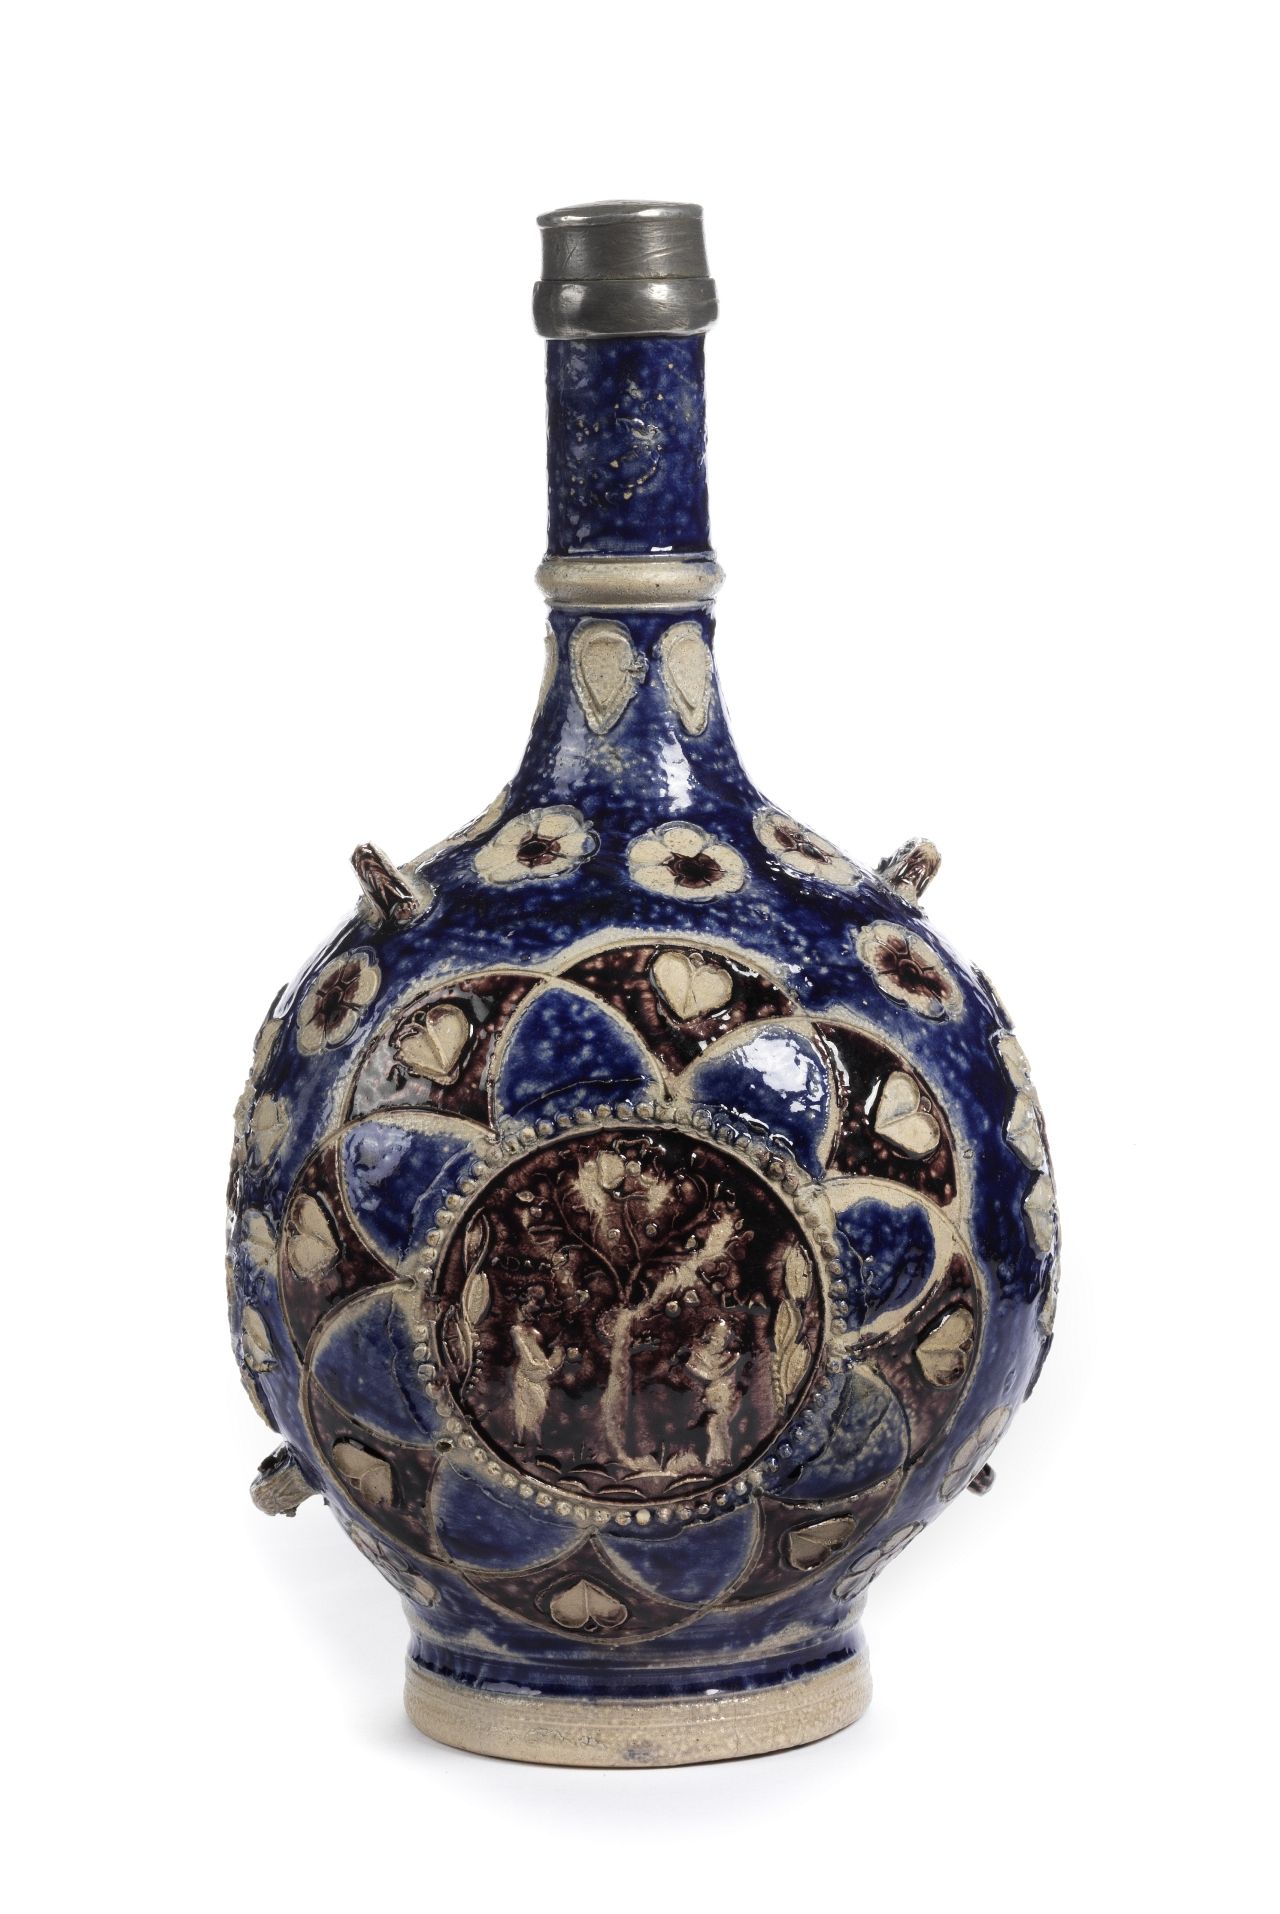 westerwald-stoneware-pilgrims-bottle-adam-eve-1680